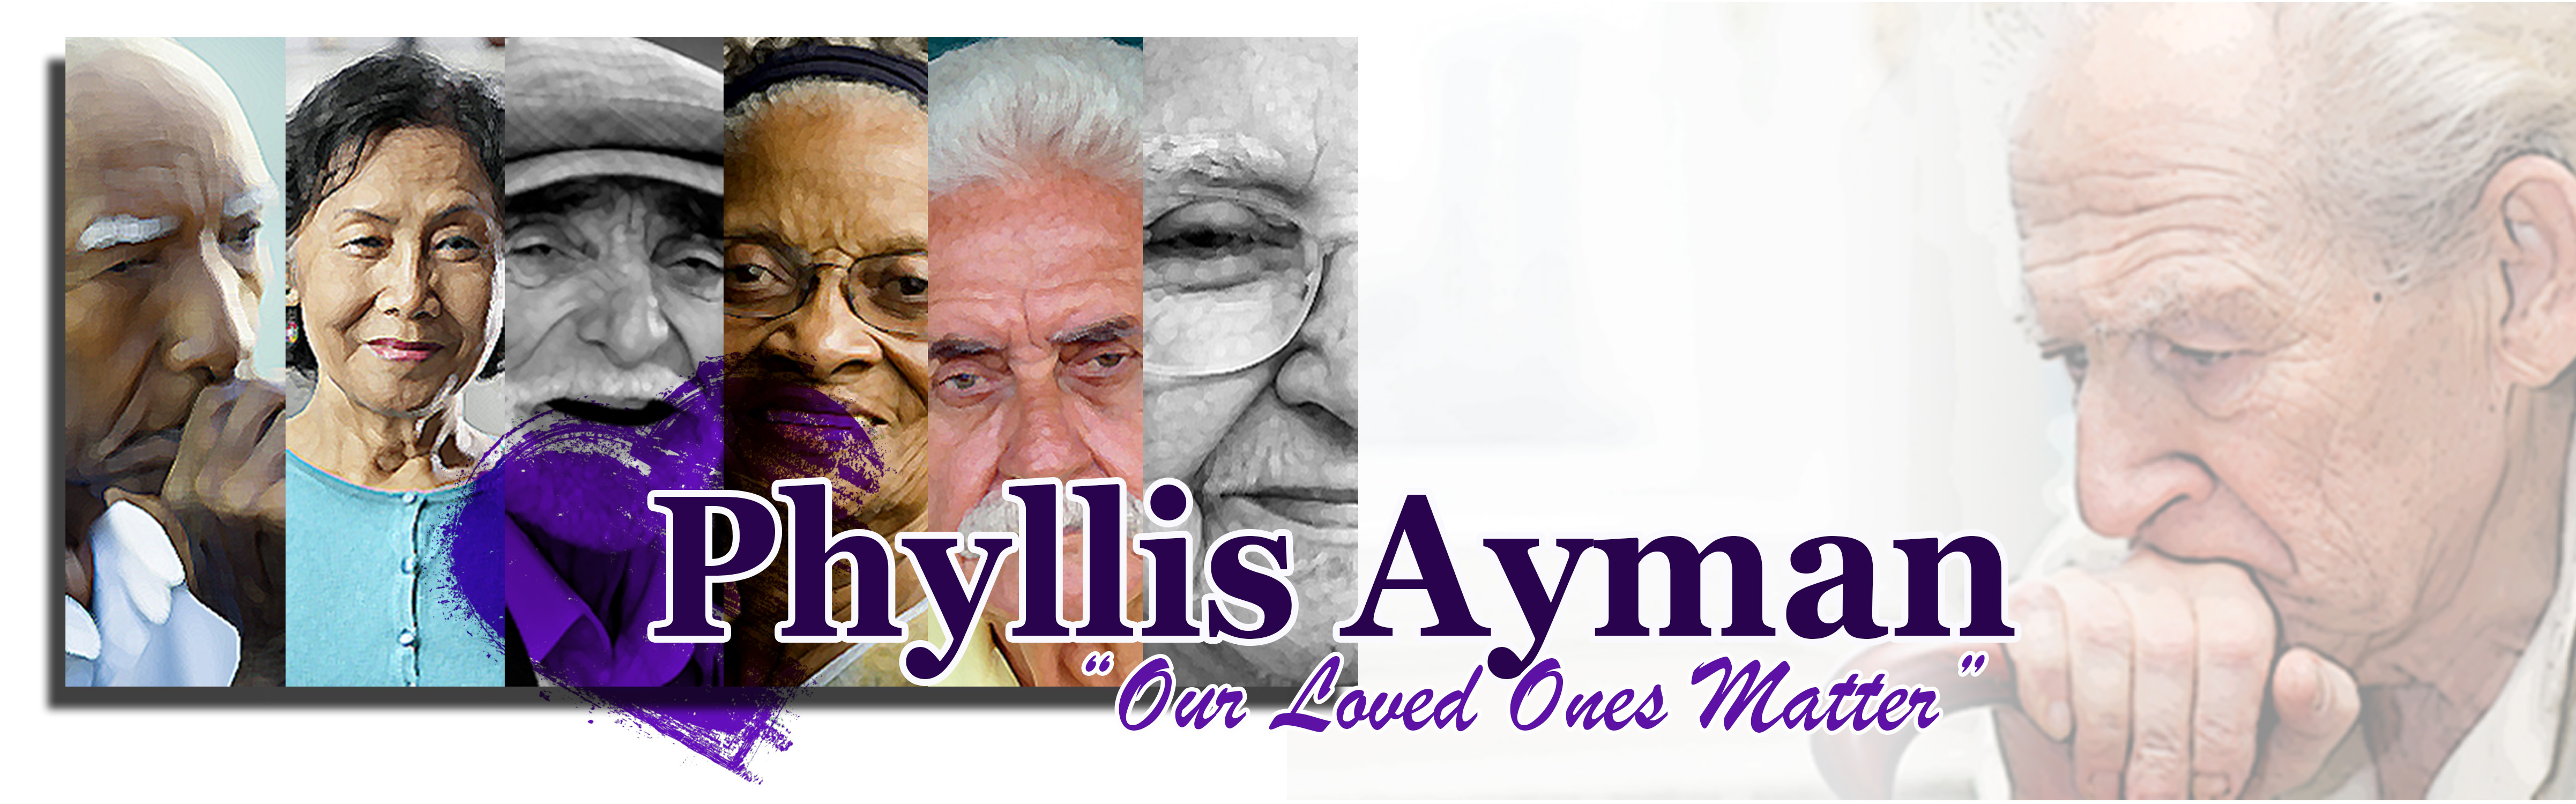 Phyllis Ayam Banner 01092020.jpg